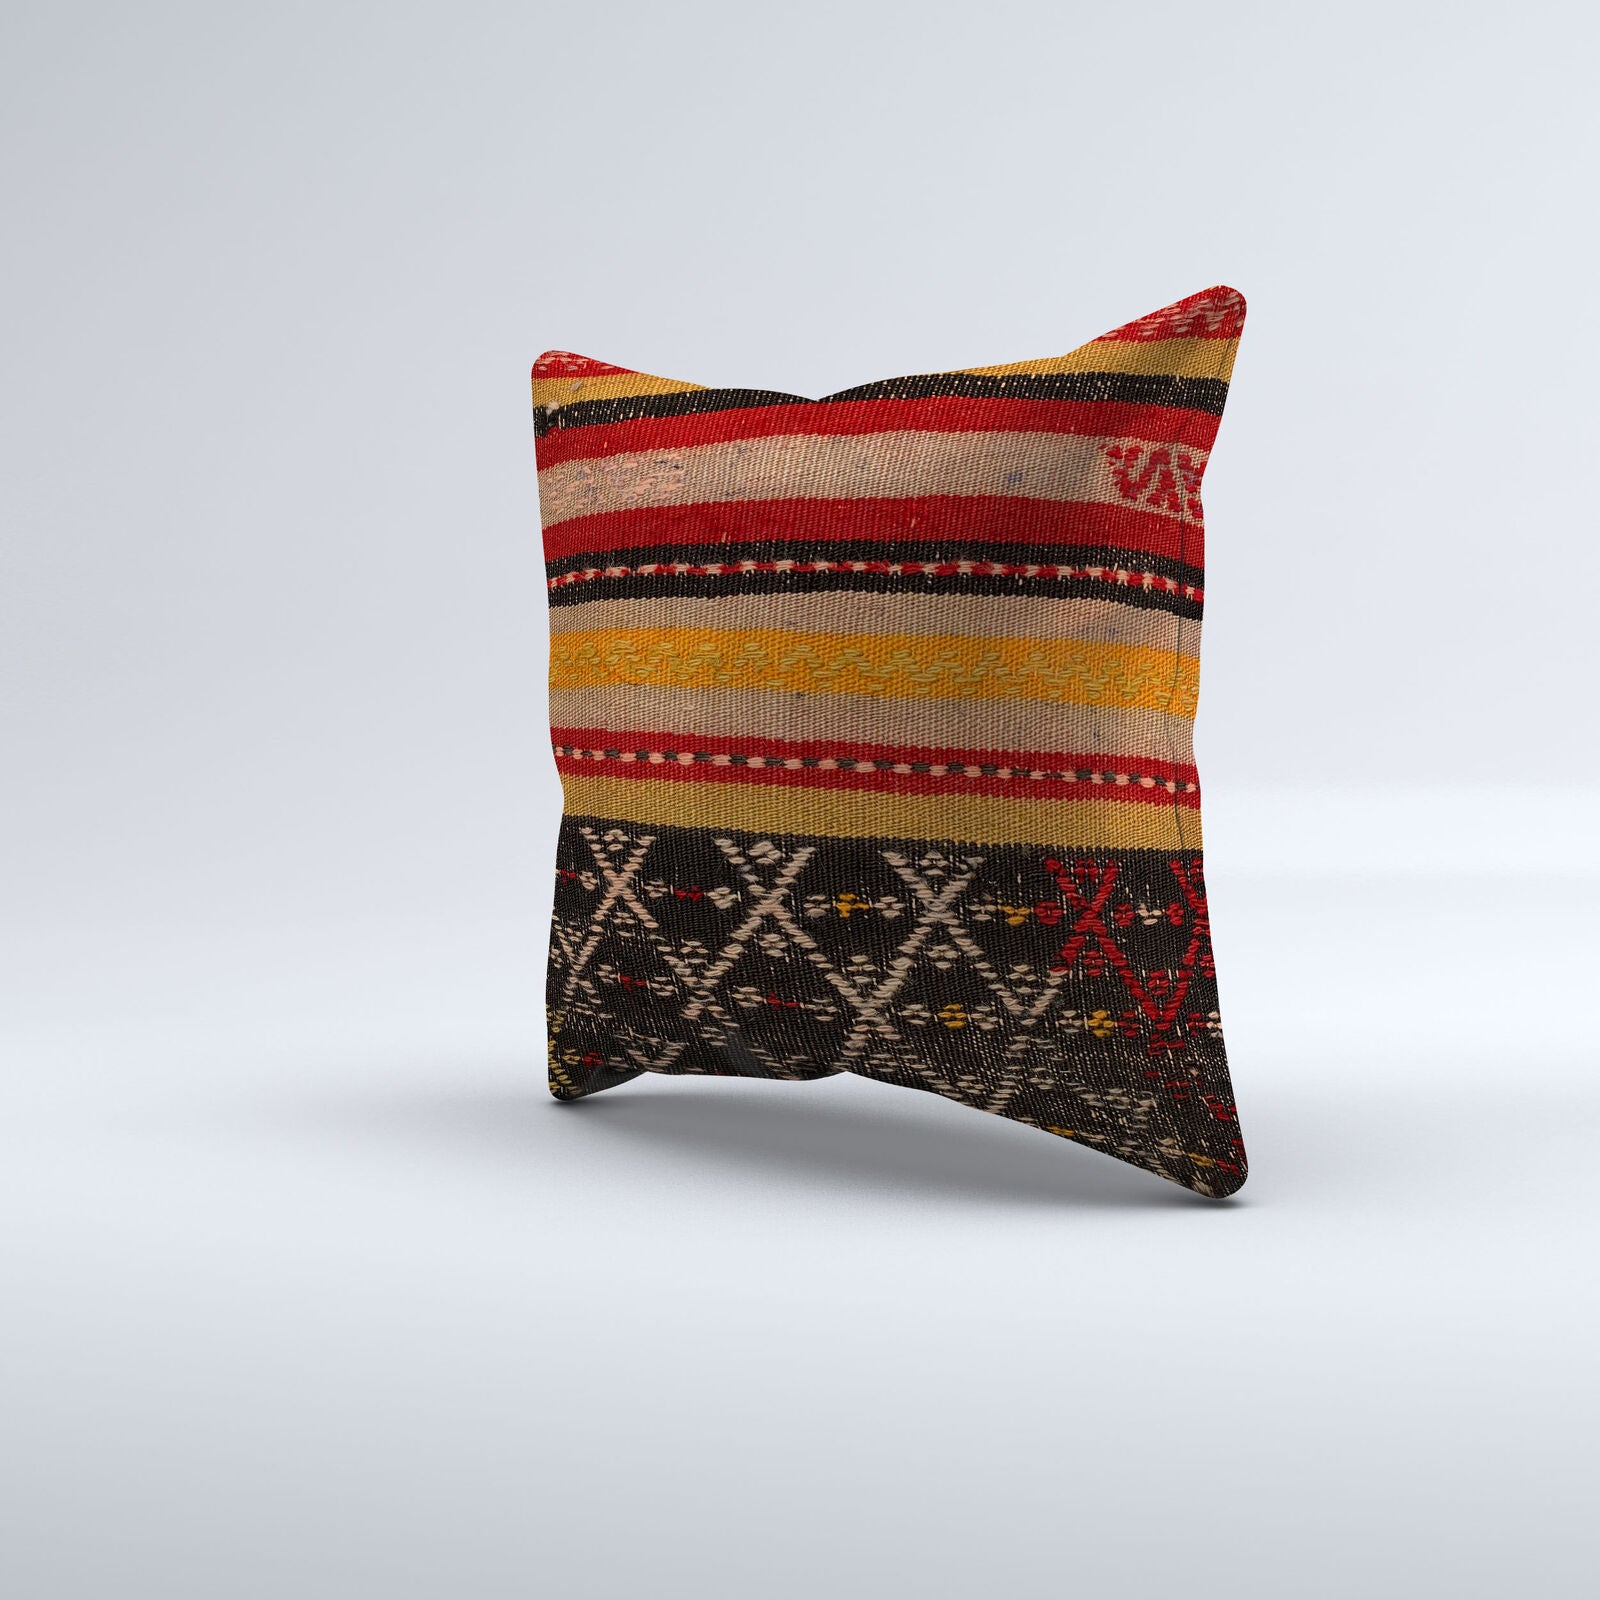 Vintage Turkish Kilim Cushion Cover 40x40 cm 16x16 in  Square Pillowcase 40983